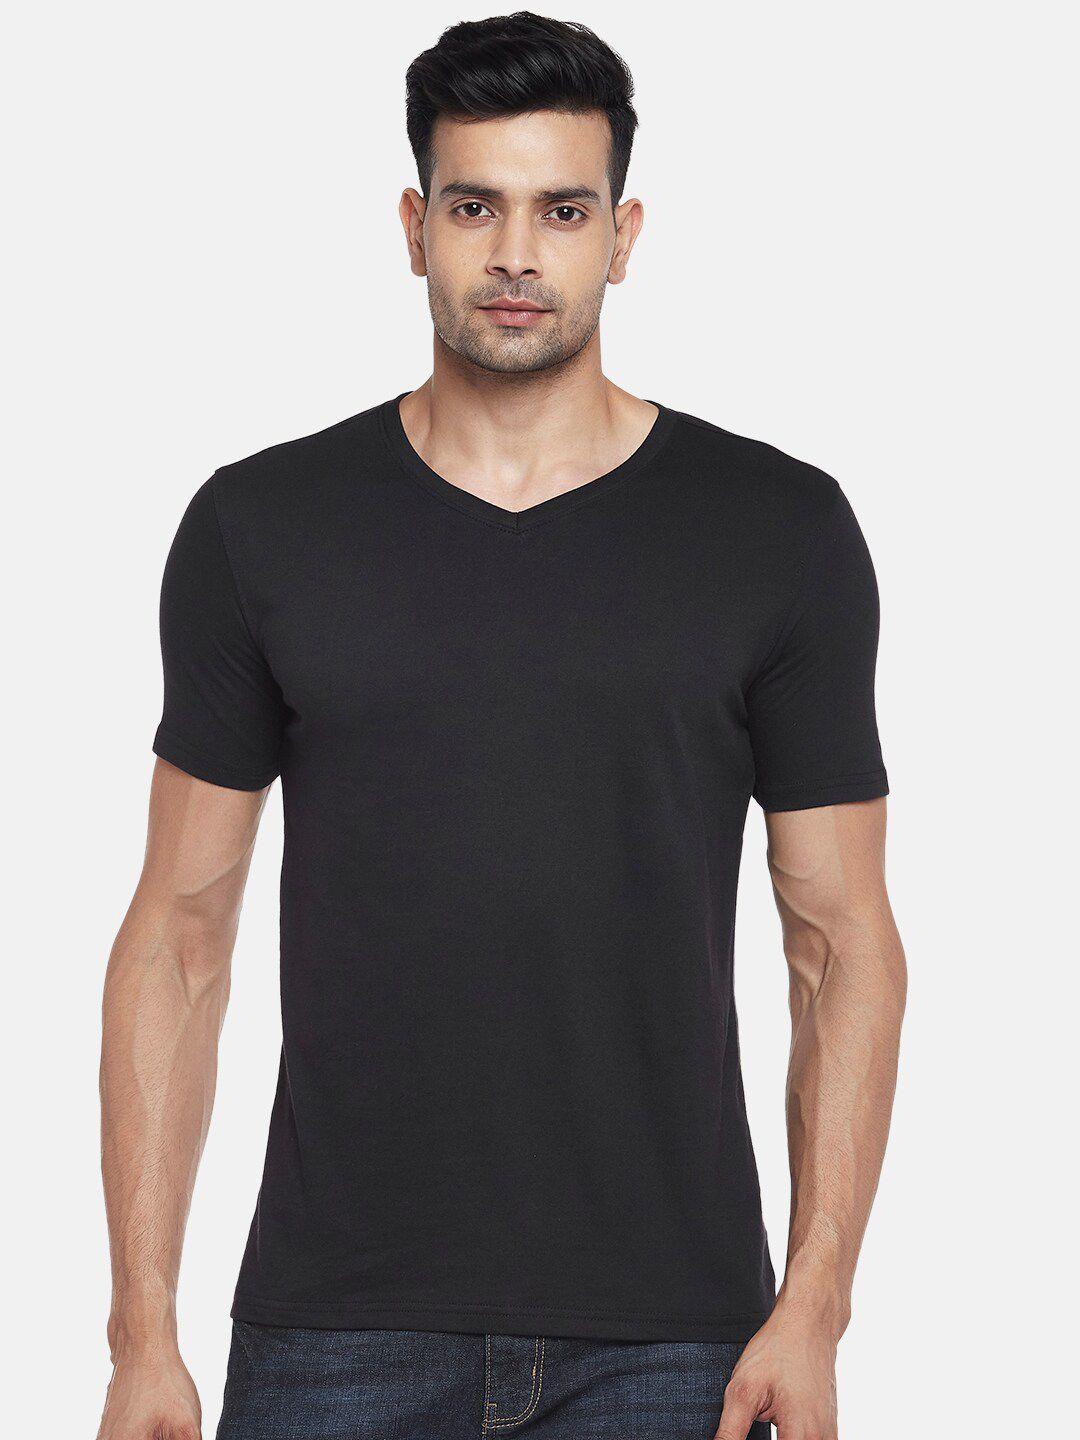 byford-by-pantaloons-men-black-v-neck-pockets-t-shirt